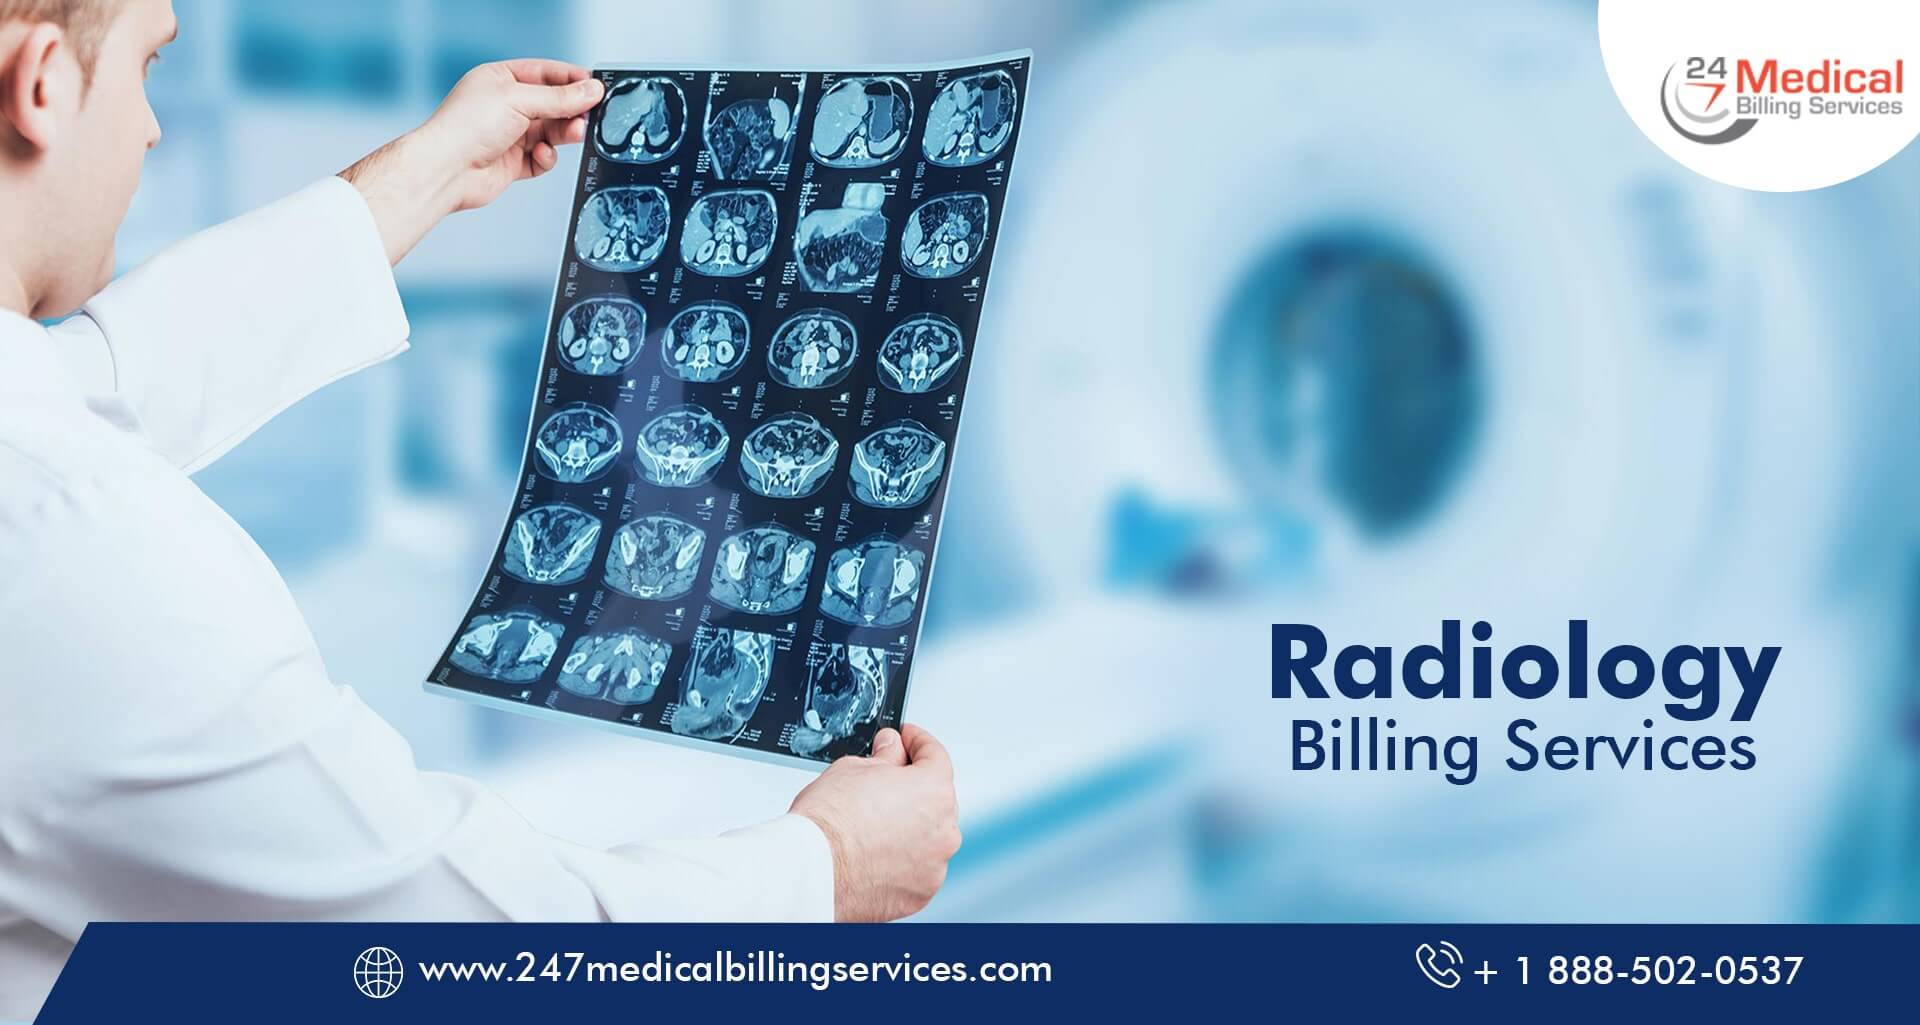  Radiology Billing Services in Cambridge, Massachusetts (MA)